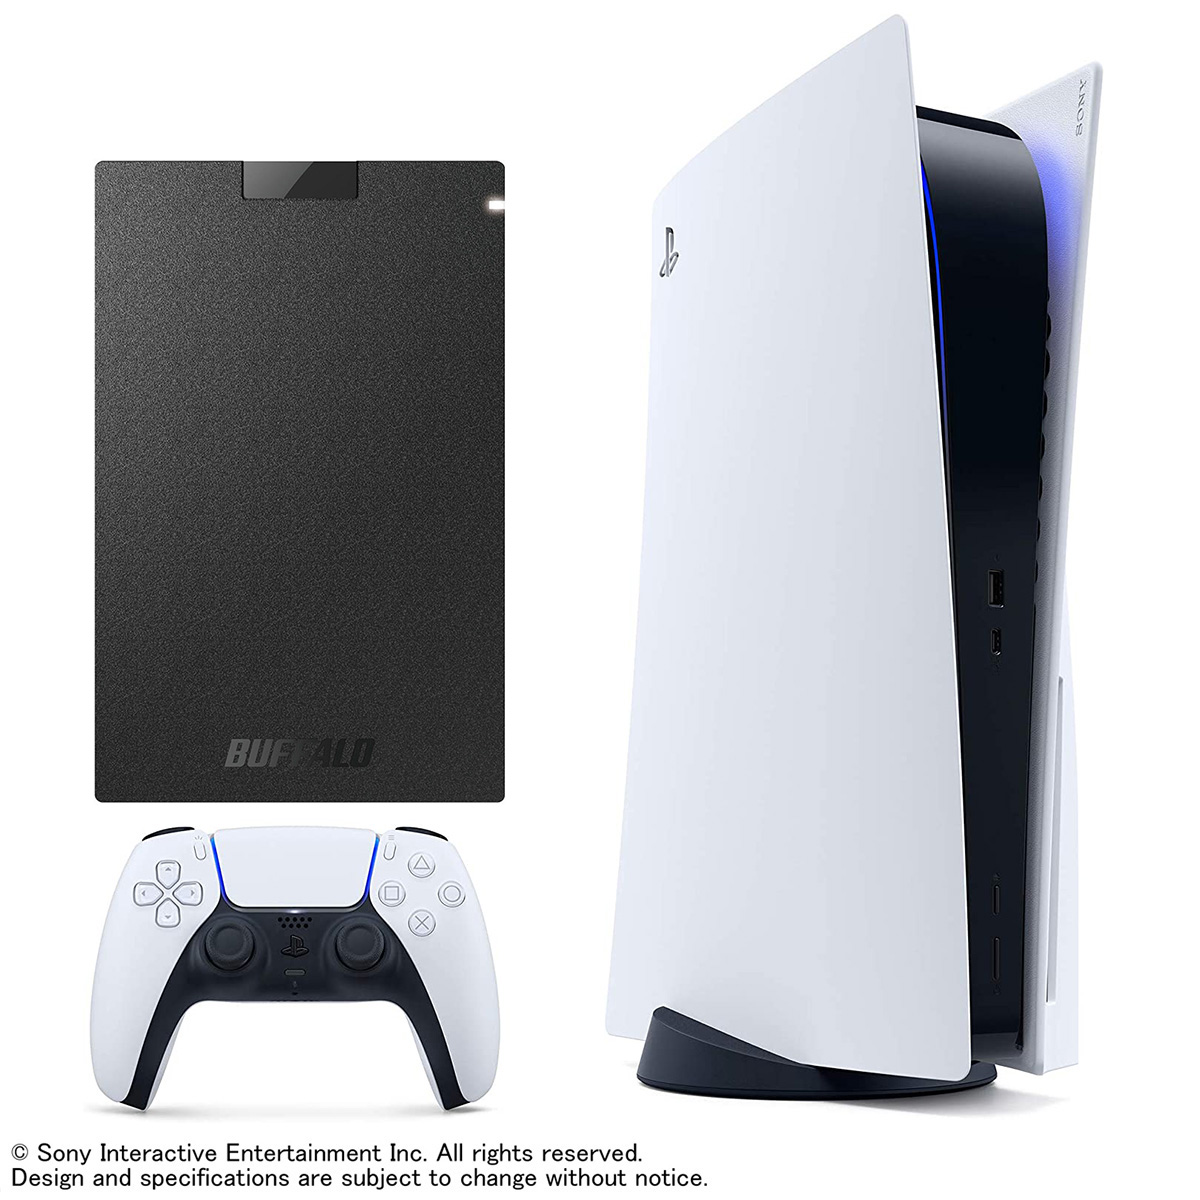 ［PS5］PlayStation5(価格改定モデル) 本体 ディスクドライブ搭載 プレイステーション5 プレステ + バッファロー 外付けポータブルSSD USB3.2 500GB ブラック